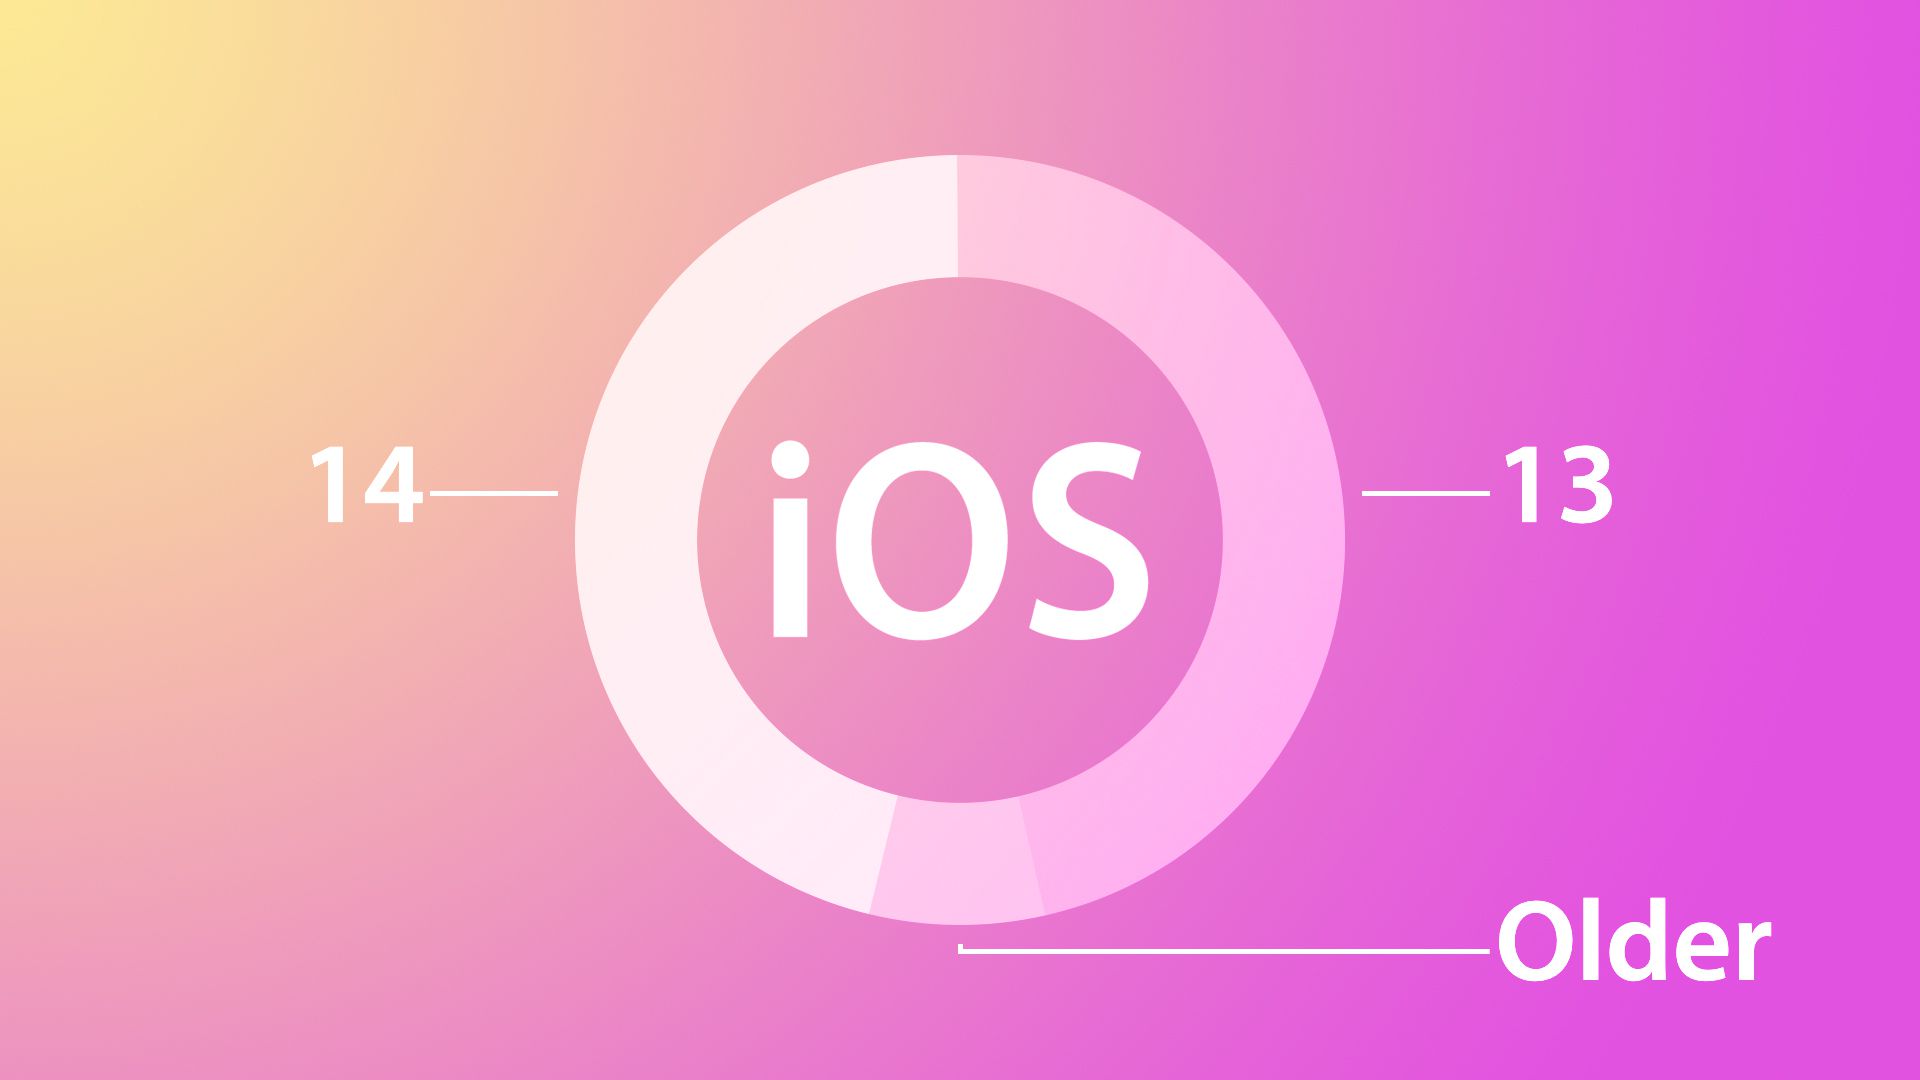 iOS 14 Poised to Surpass iOS 13 Installations as Adoption Nears 50% - MacRumors